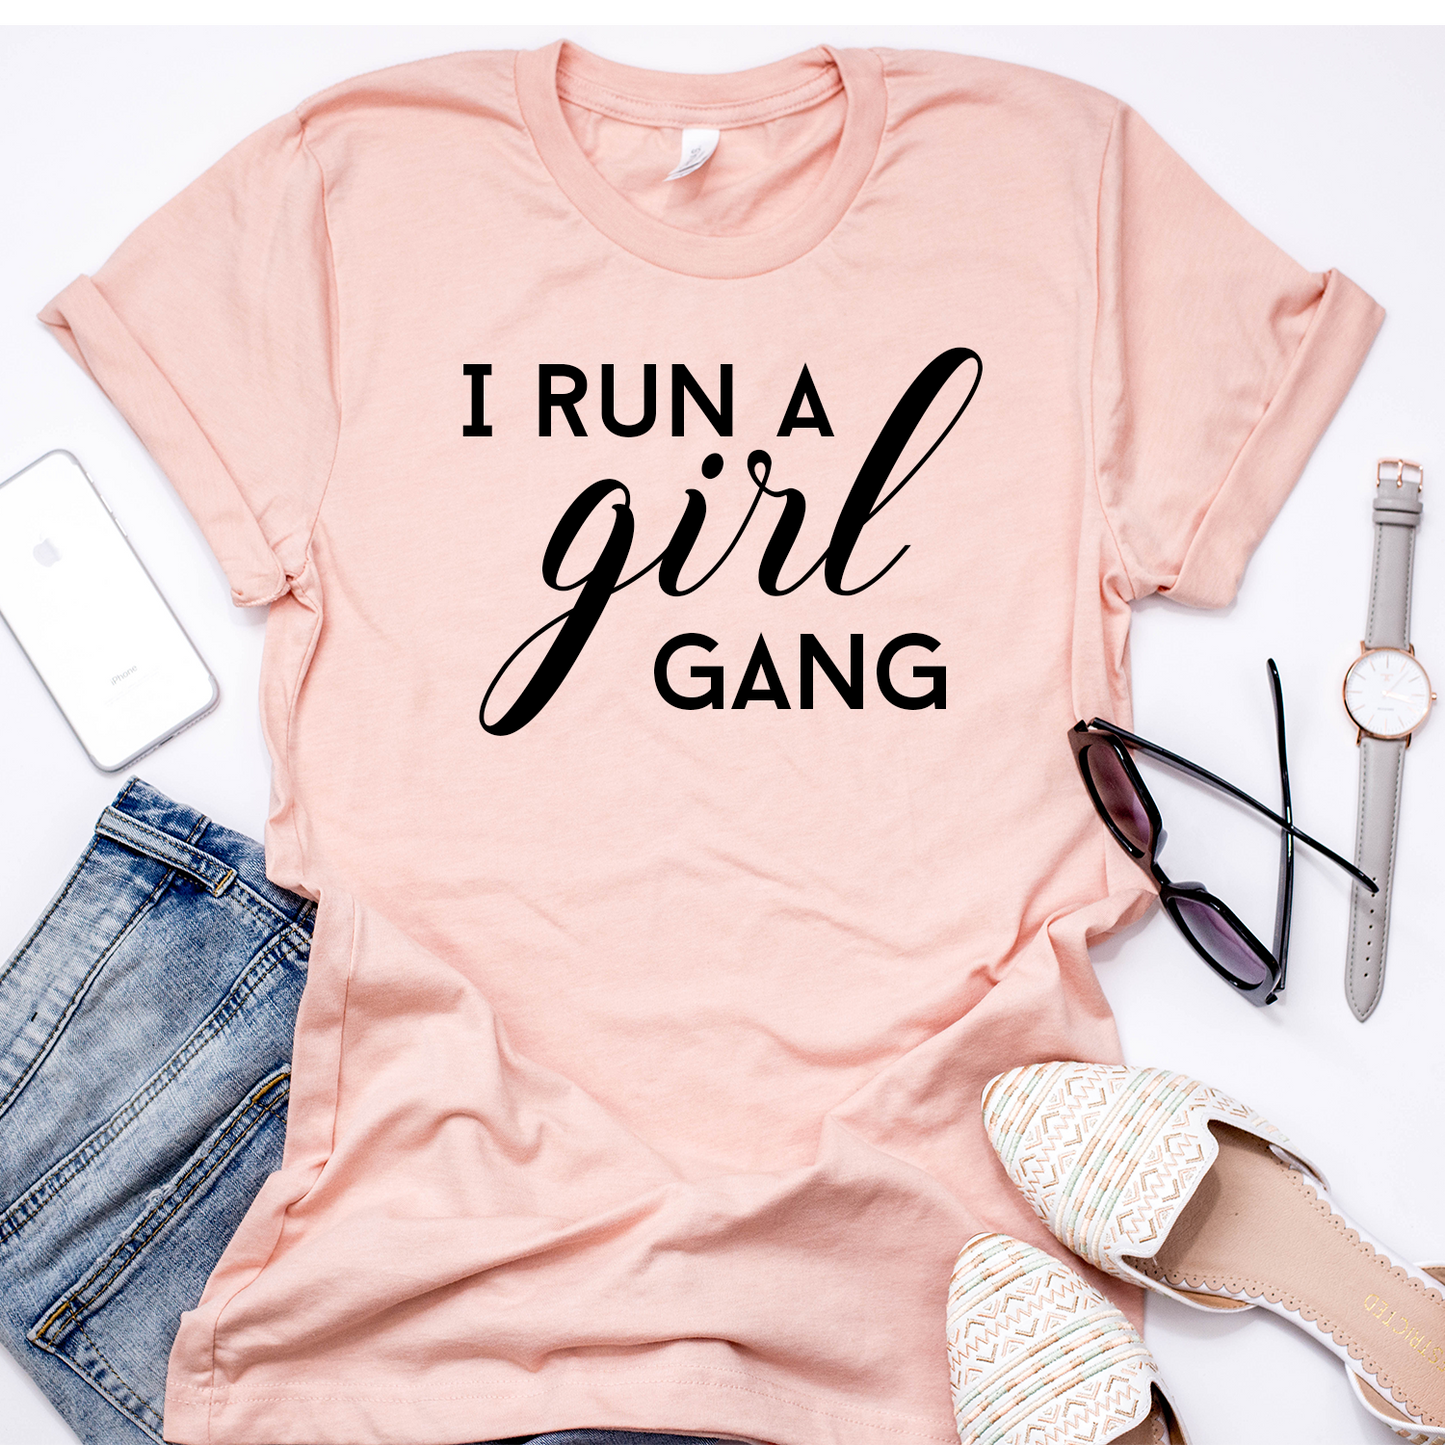 I Run A Girl Gang - Twinning Set.